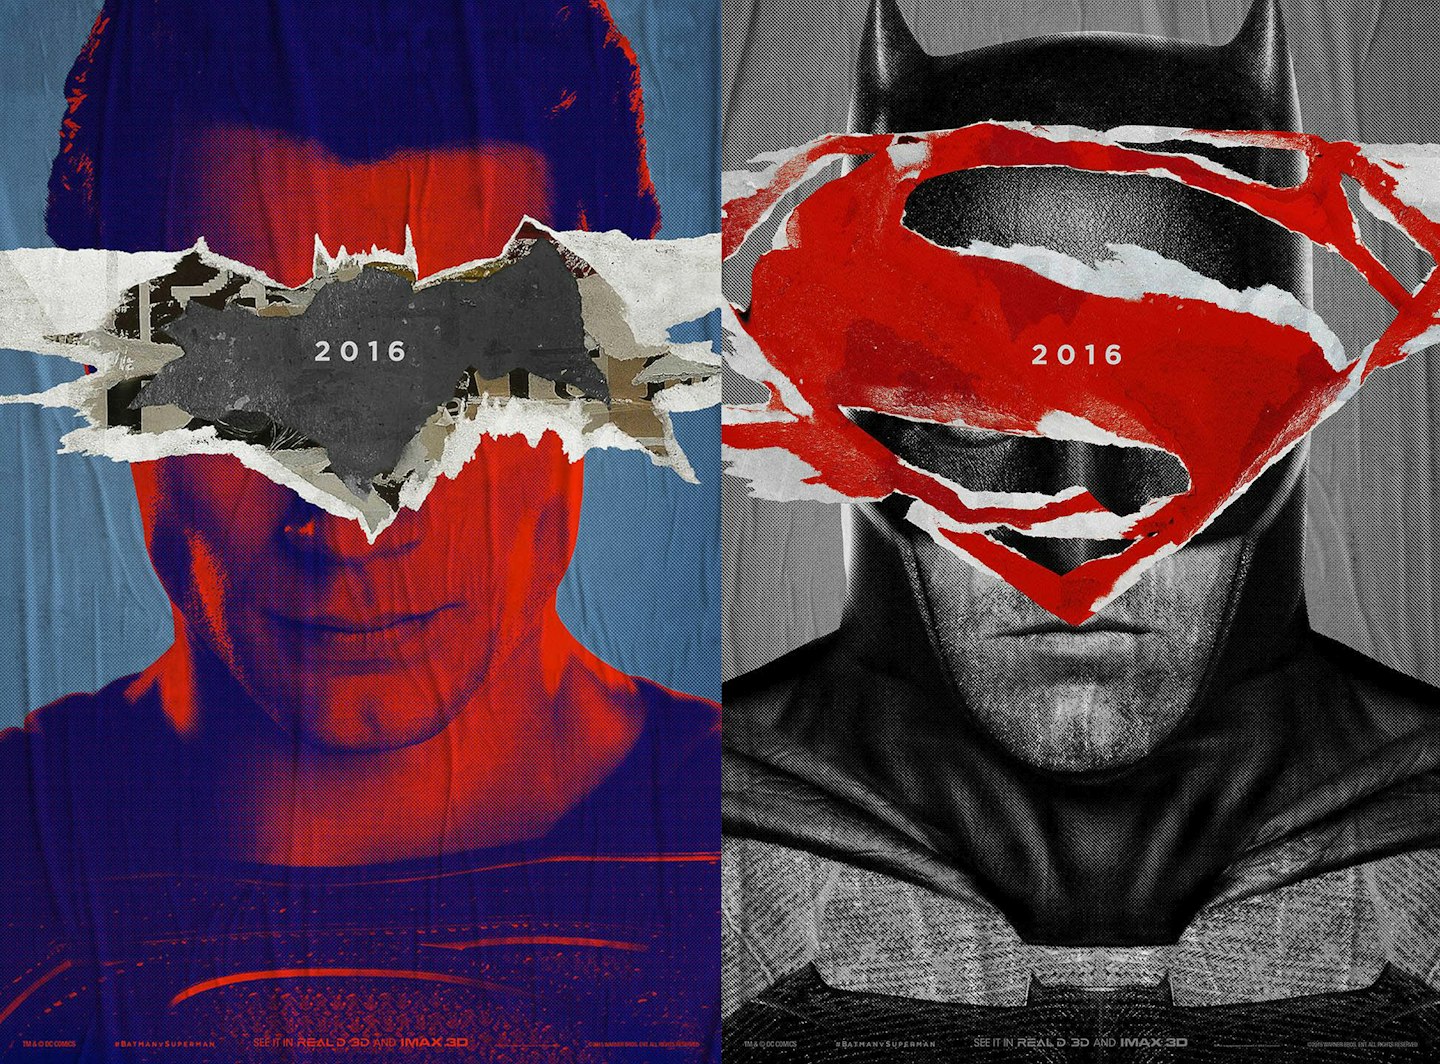 Batman V Superman first posters